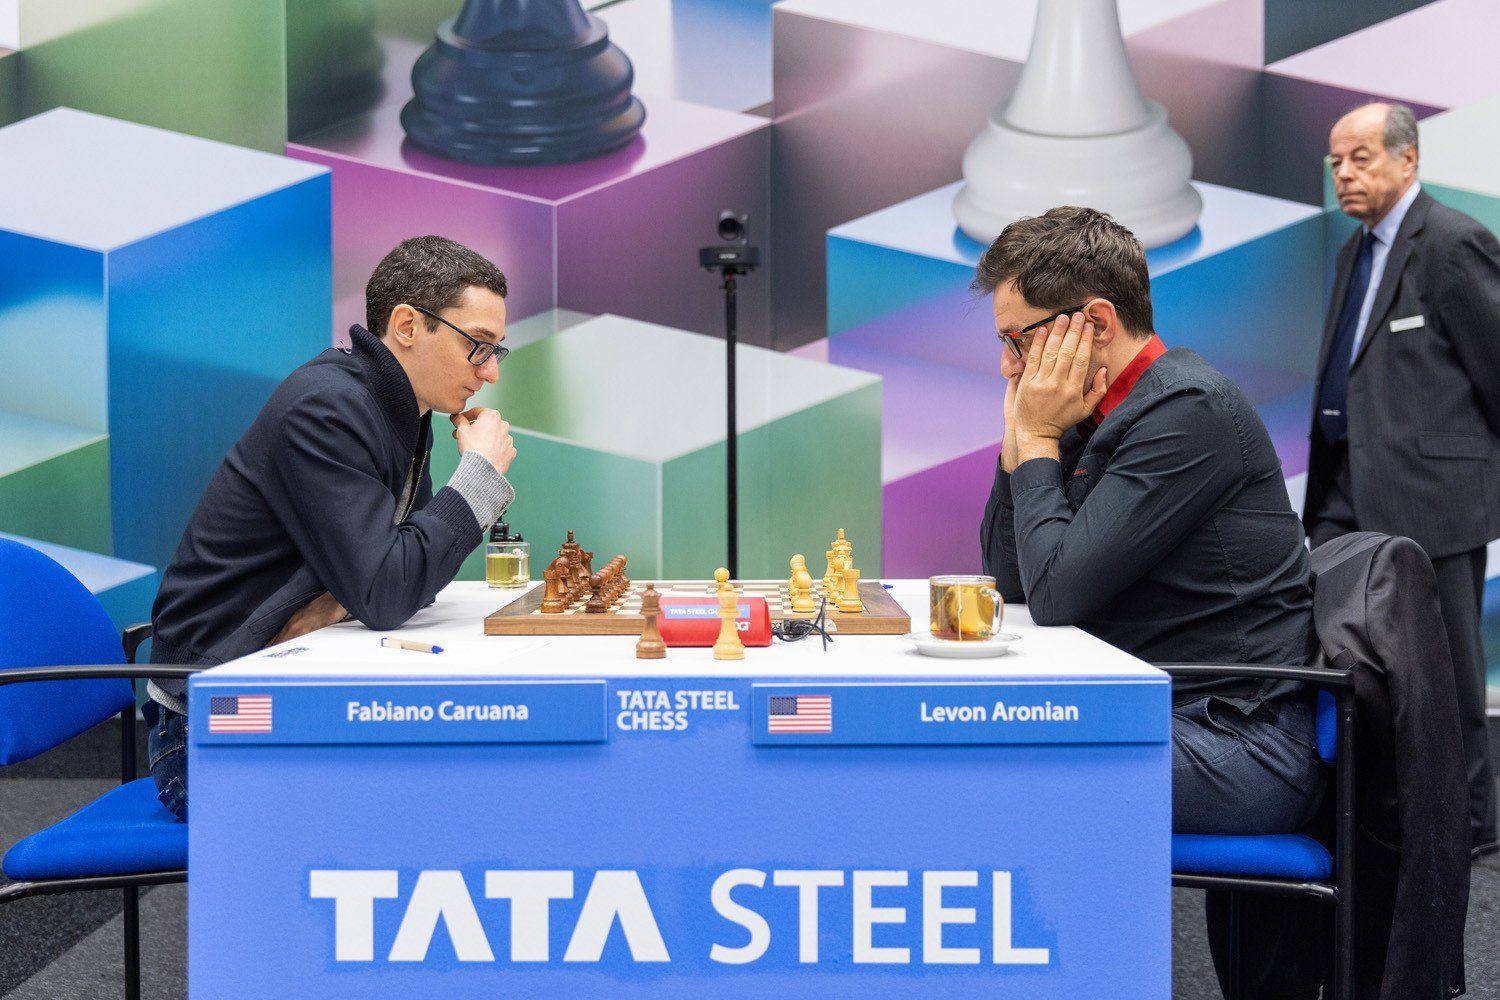 Tata Steel Chess 2023